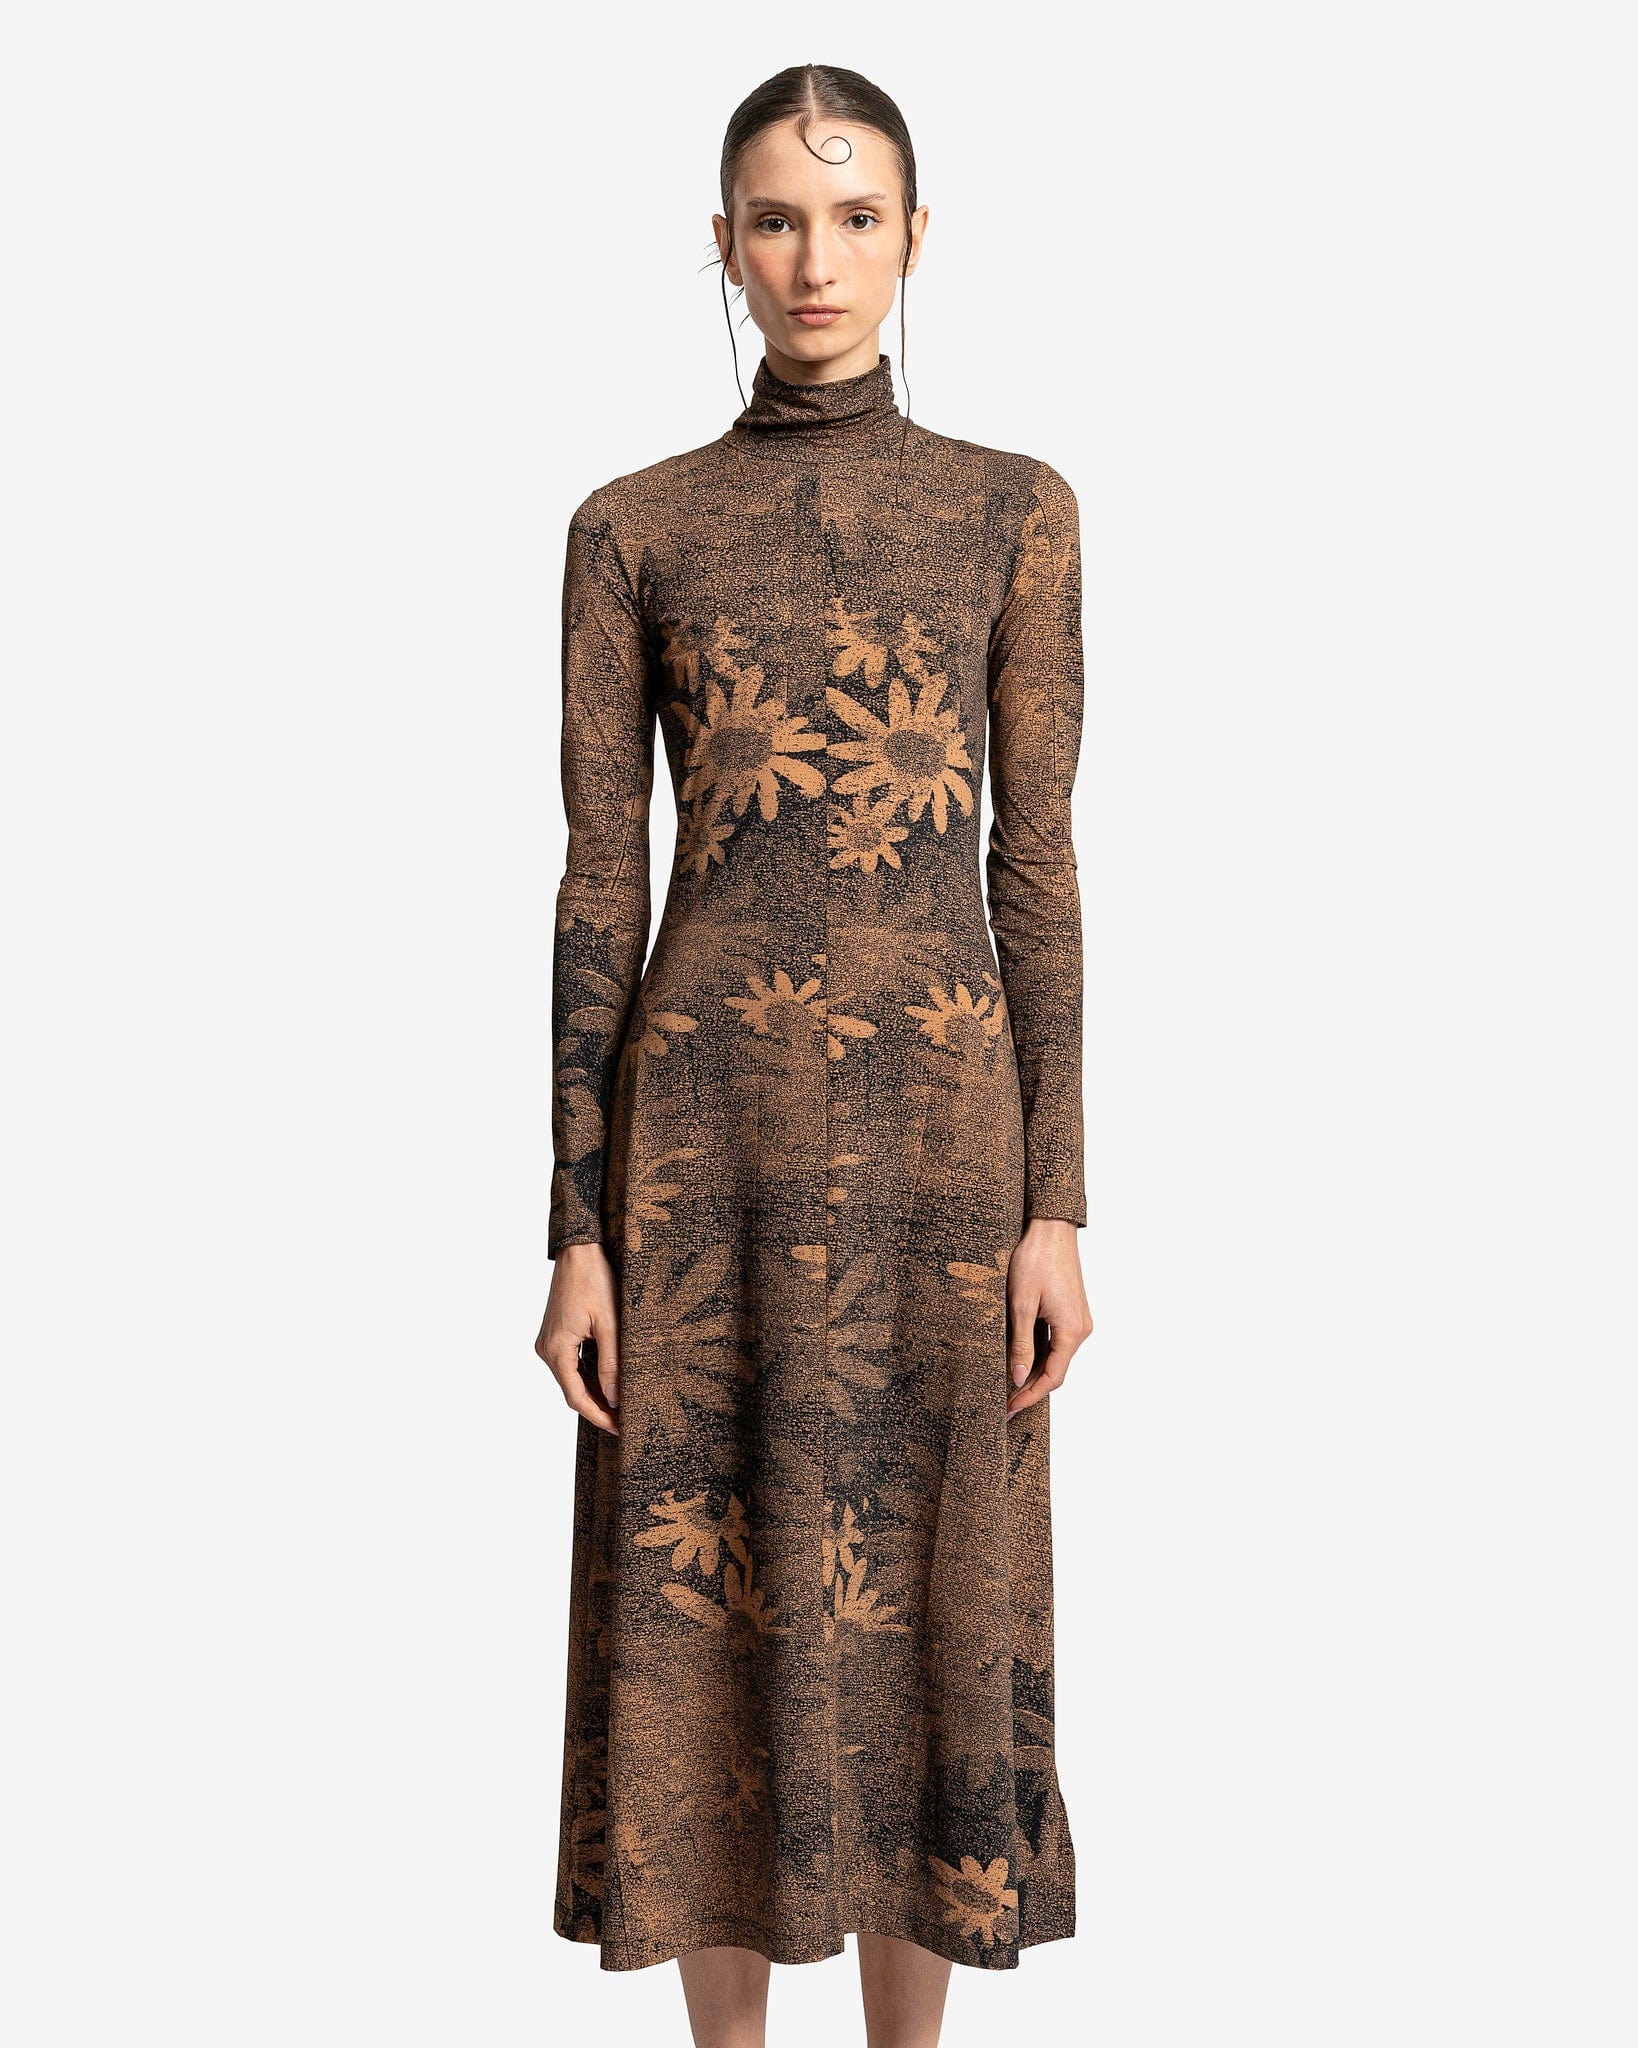 Floral Print Dress in Tan/Black